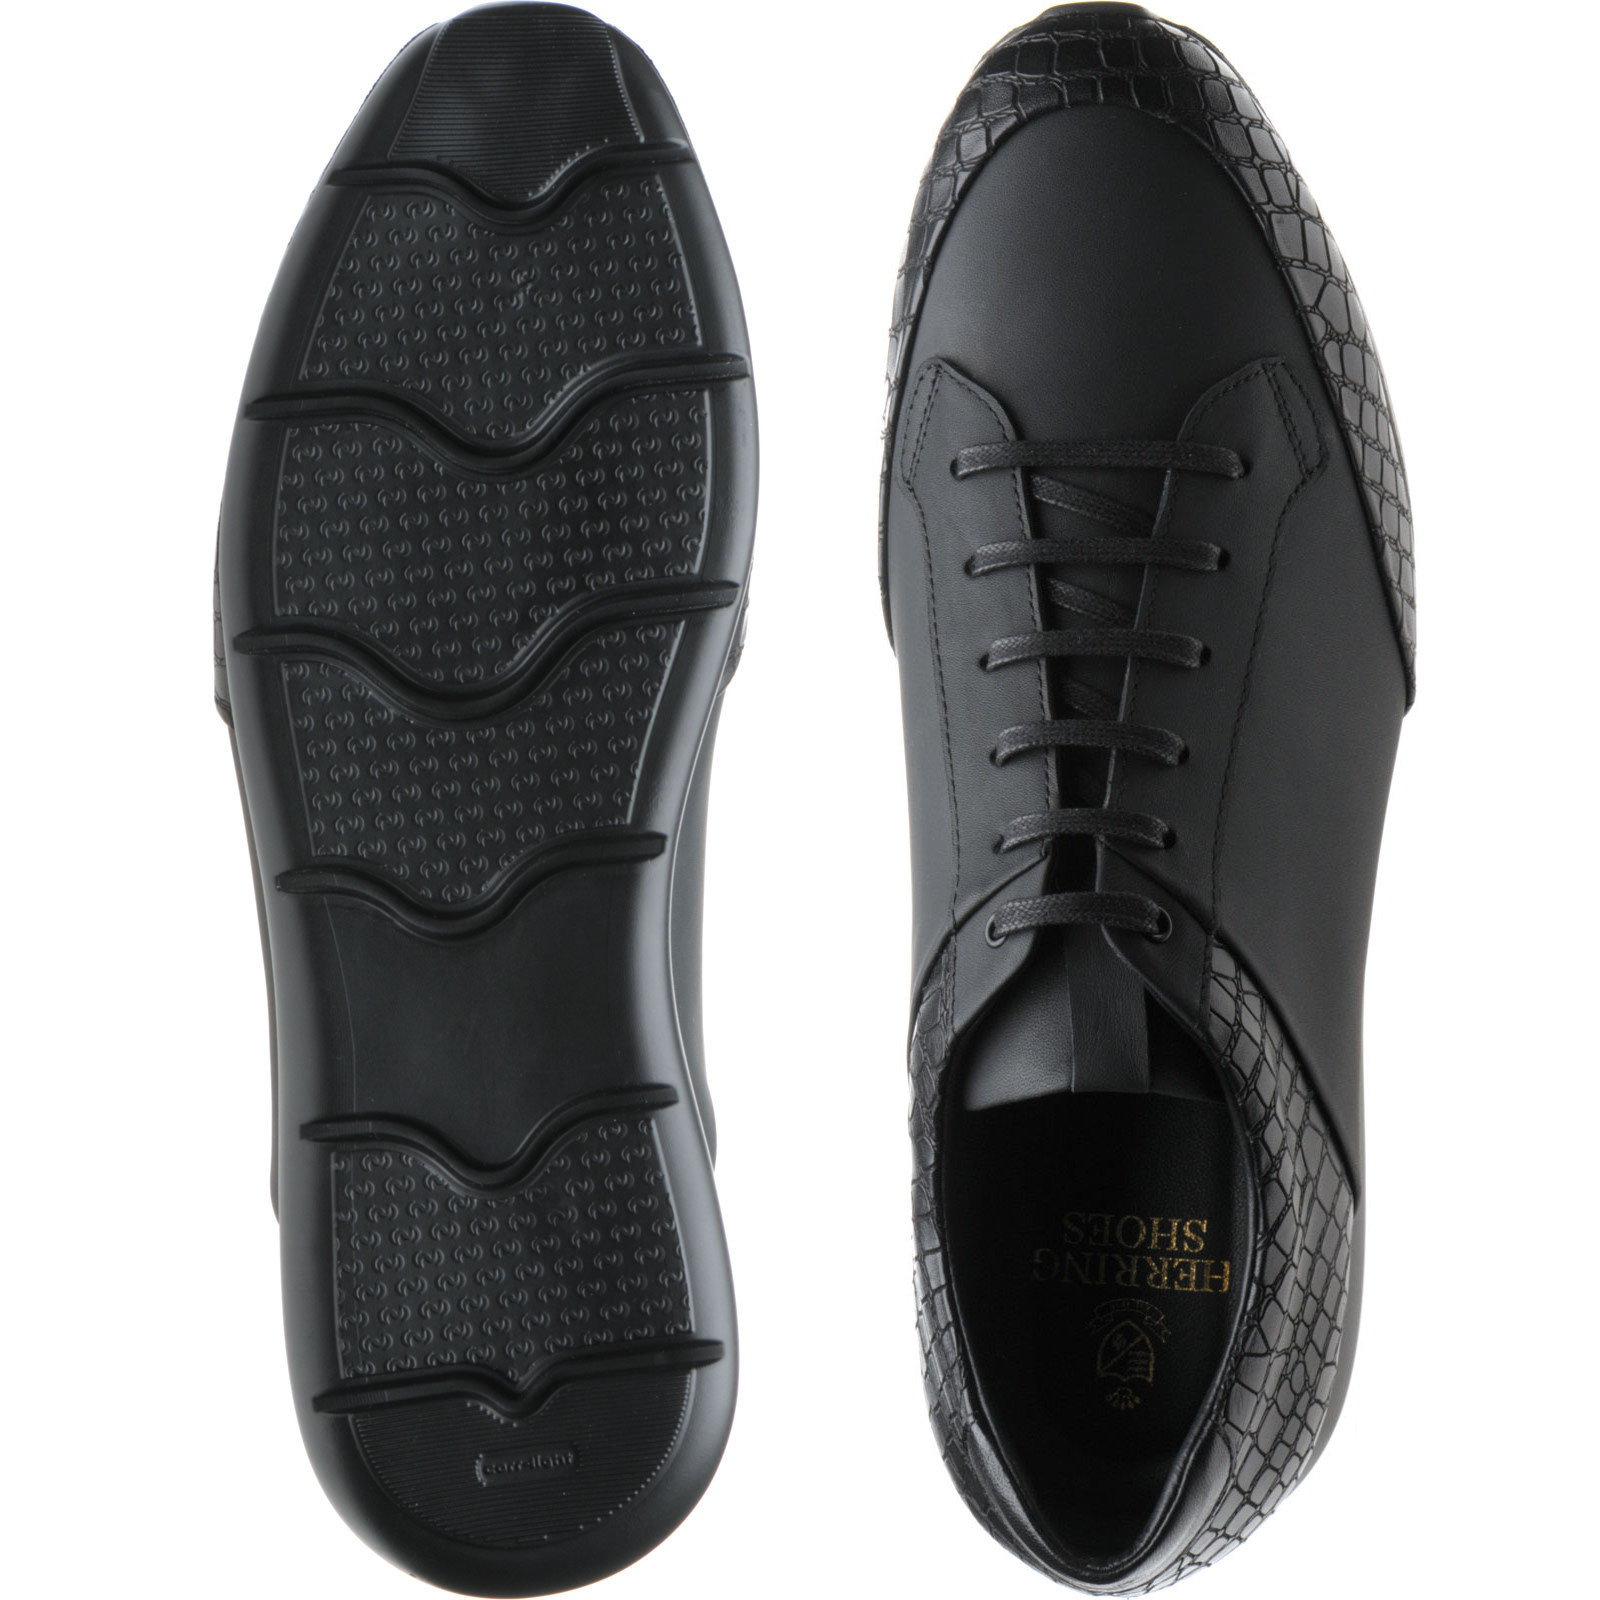 Herring shoes | Herring Executive | Cranston in Black Calf and Croc at ...